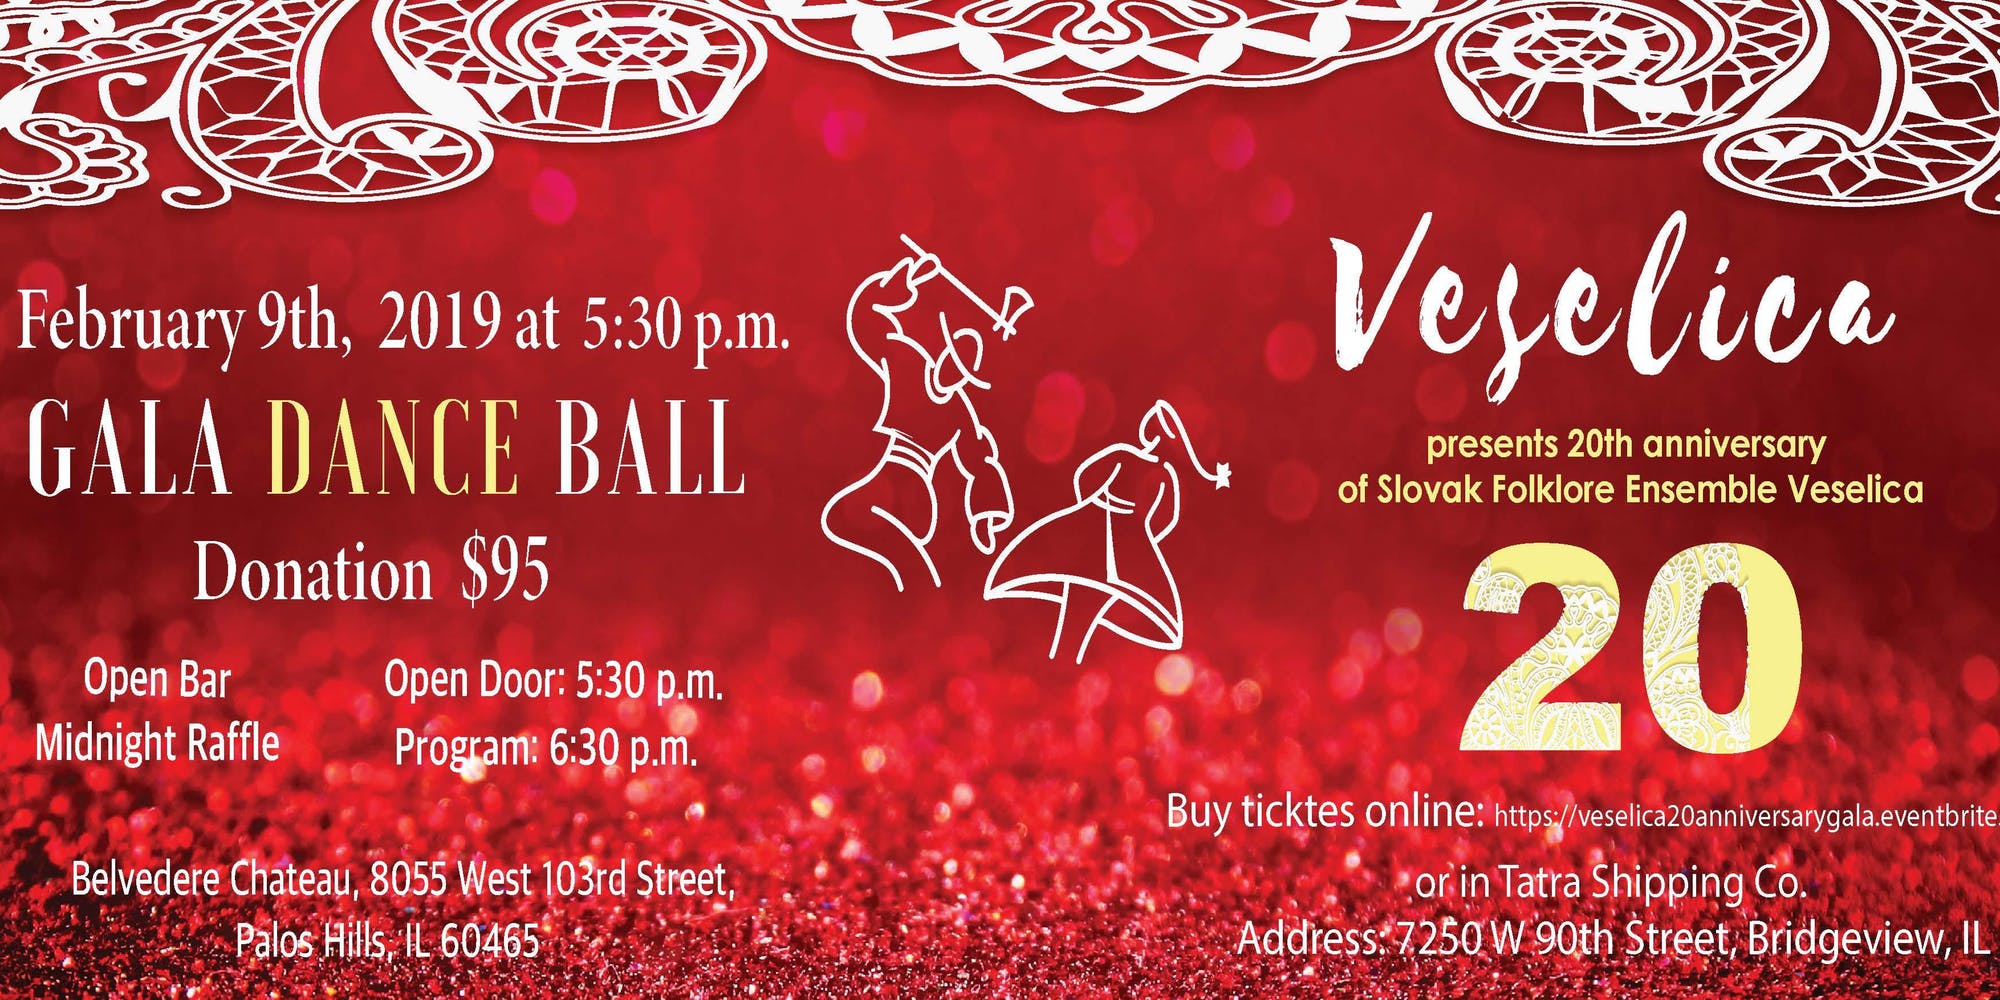 Gala Ball 2019 Chicago - 20th Anniversary of Slovak Folklore Ensemble Veselica...